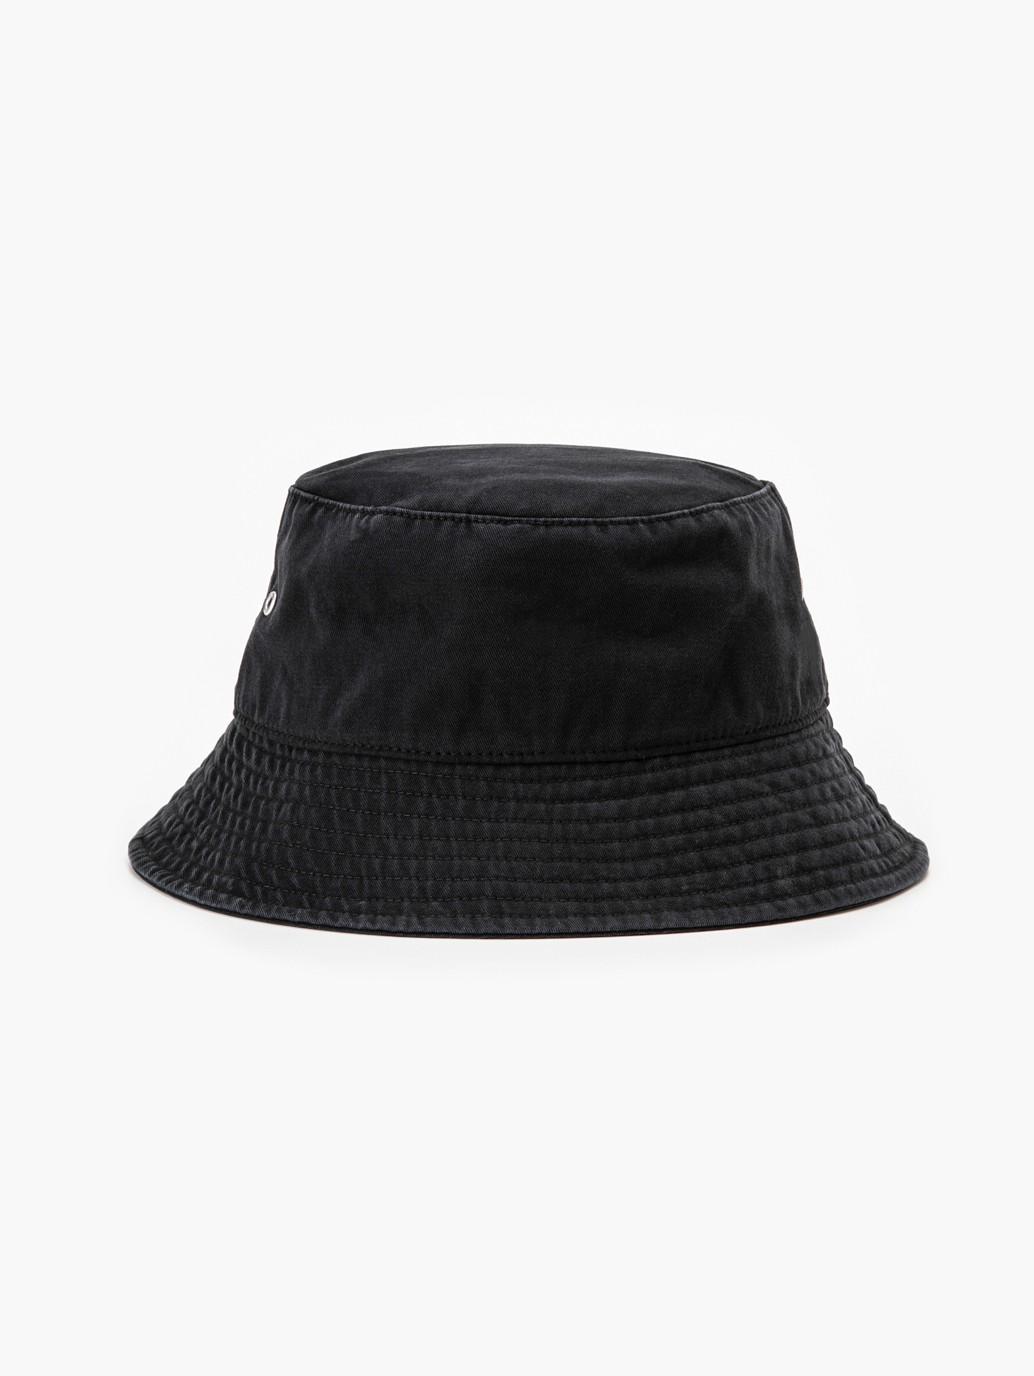 Buy Levi's® Men's Headline Logo Bucket Hat| Levi’s Official Online Store SG